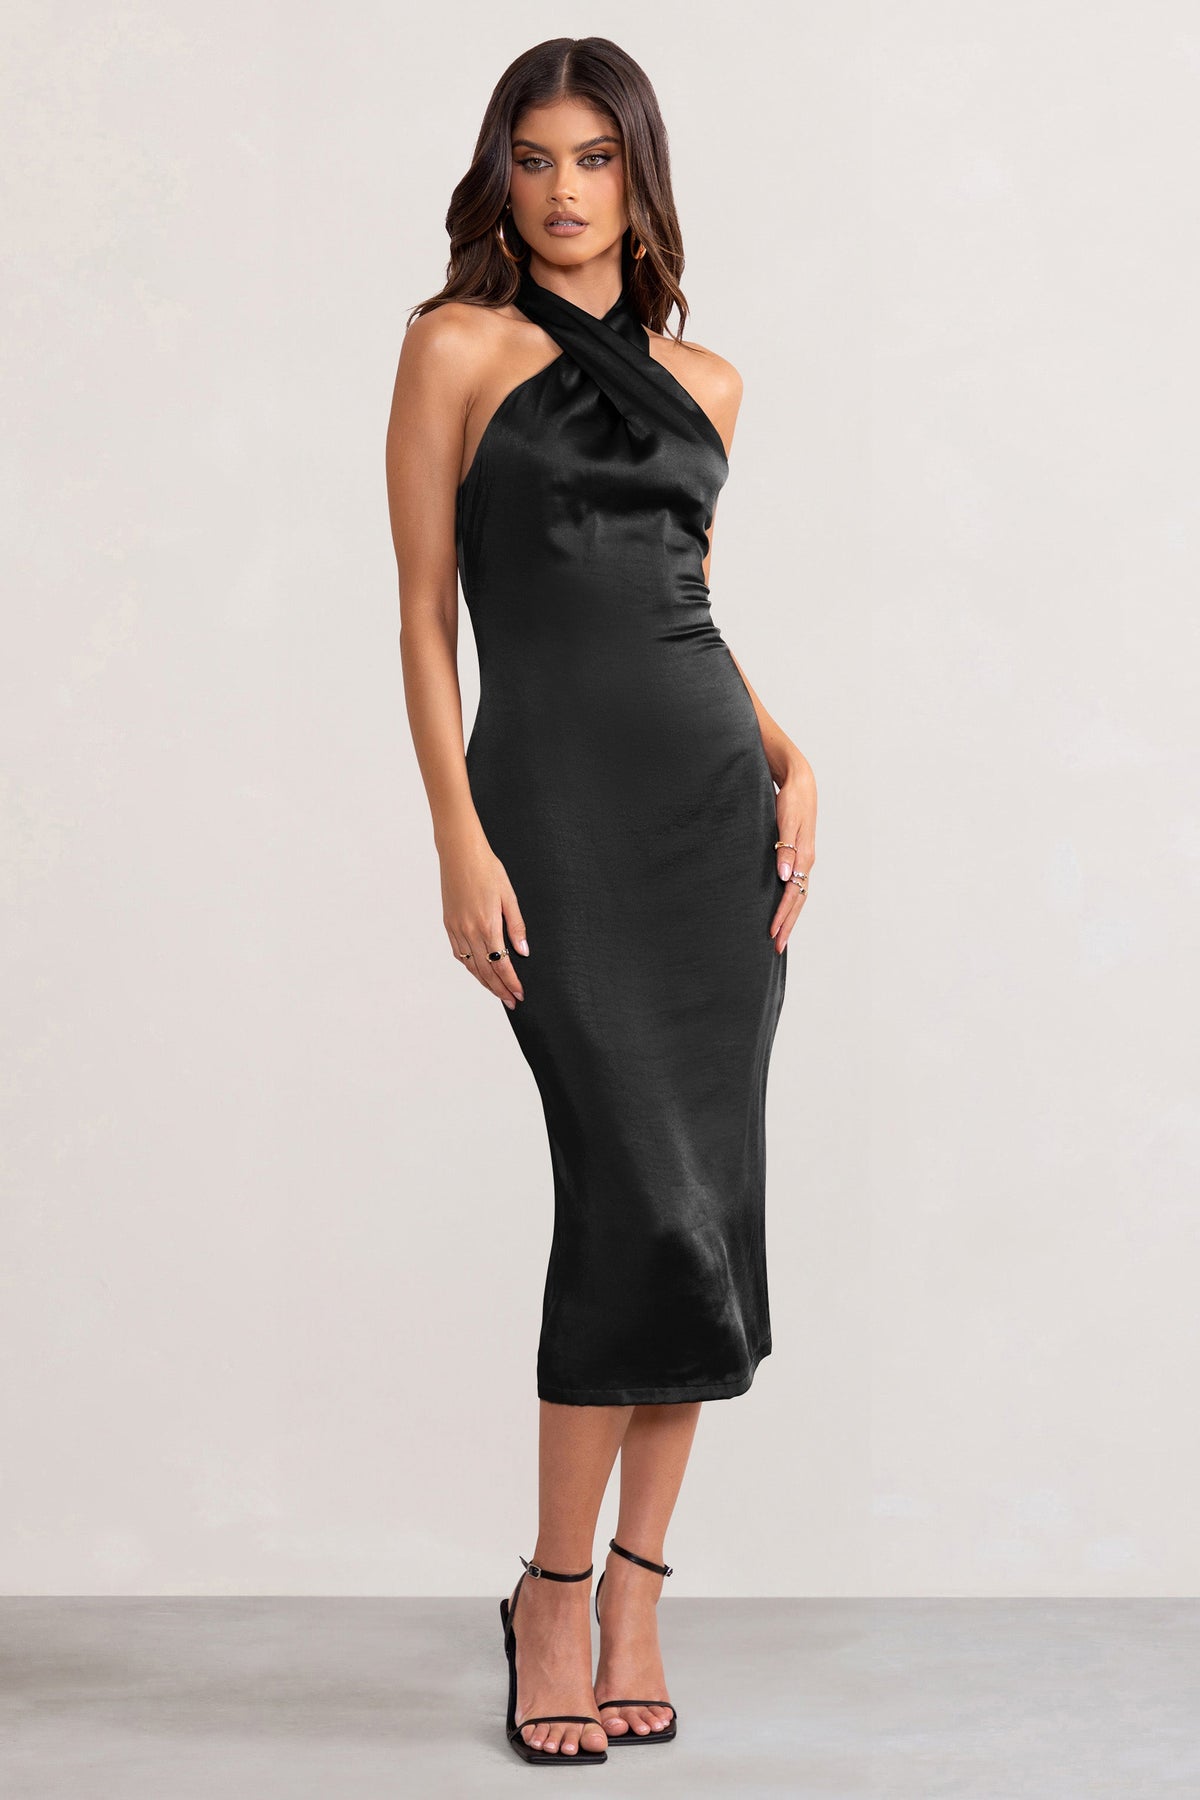 Black Midi Dress - Ribbed Knit Dress - Bodycon Midi Dress - Lulus